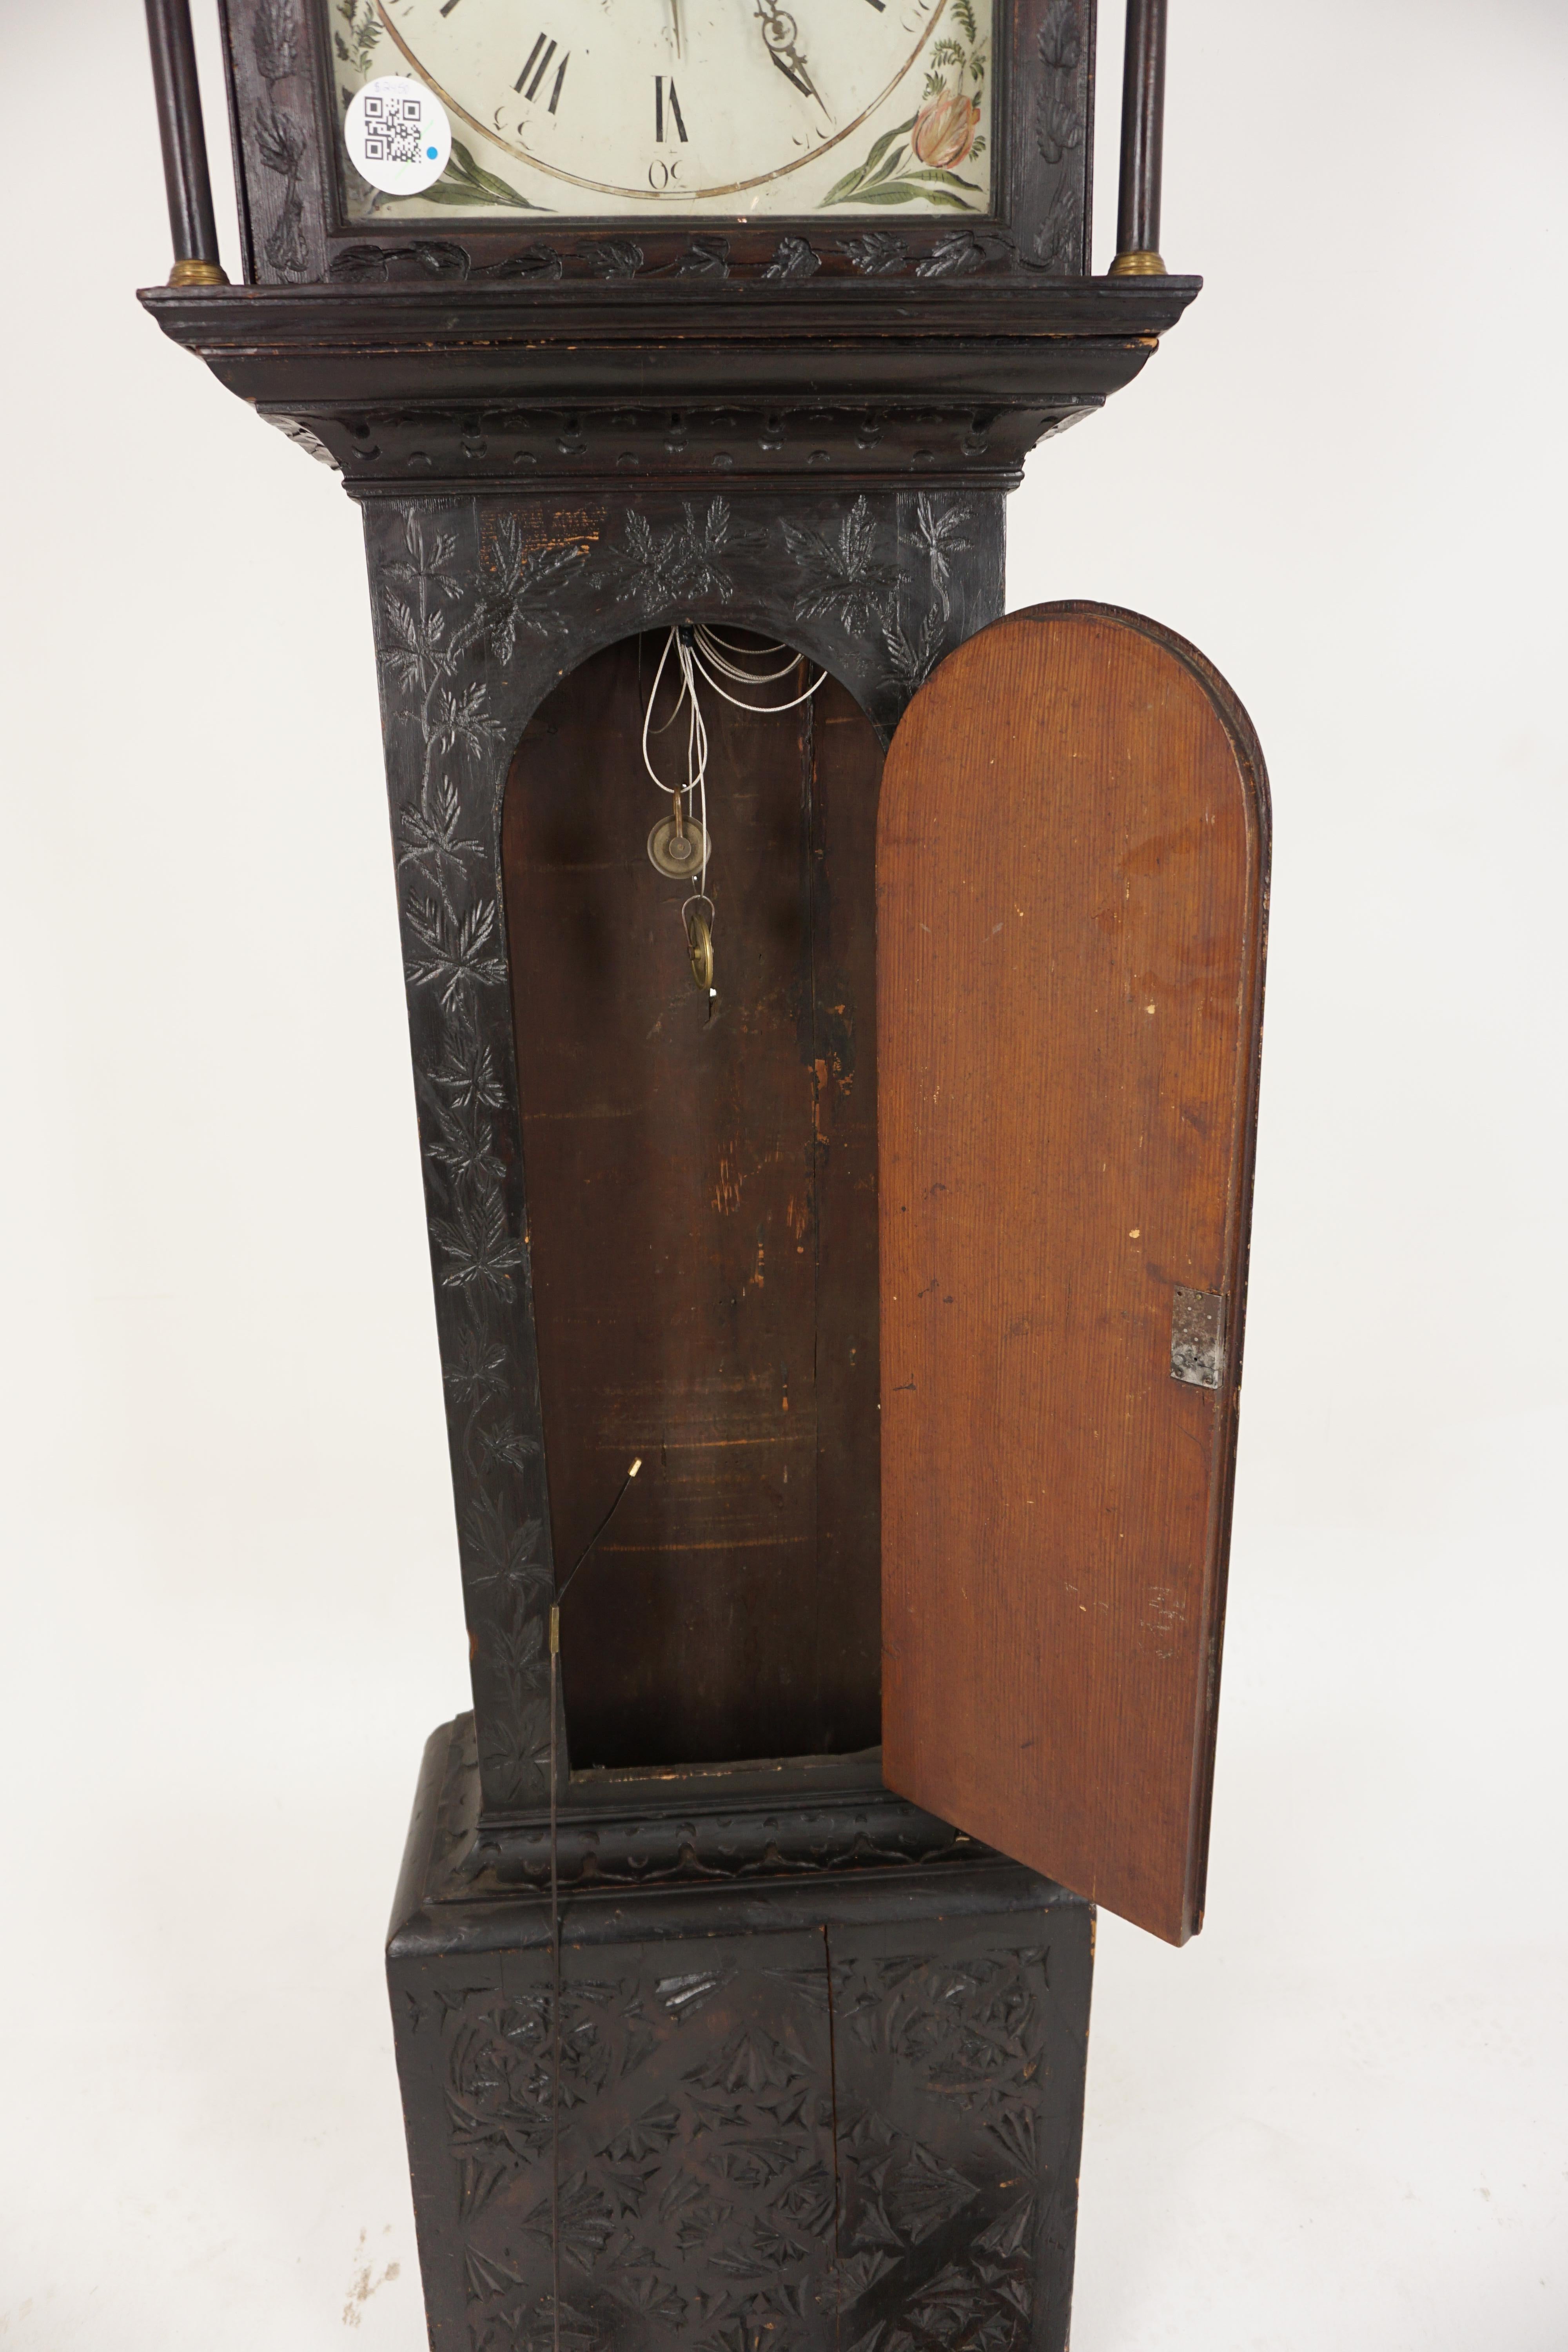 Late 19th Century Antique Carved Ebonized Pine Grandfather Long Case Clock, Scotland 1880, H372